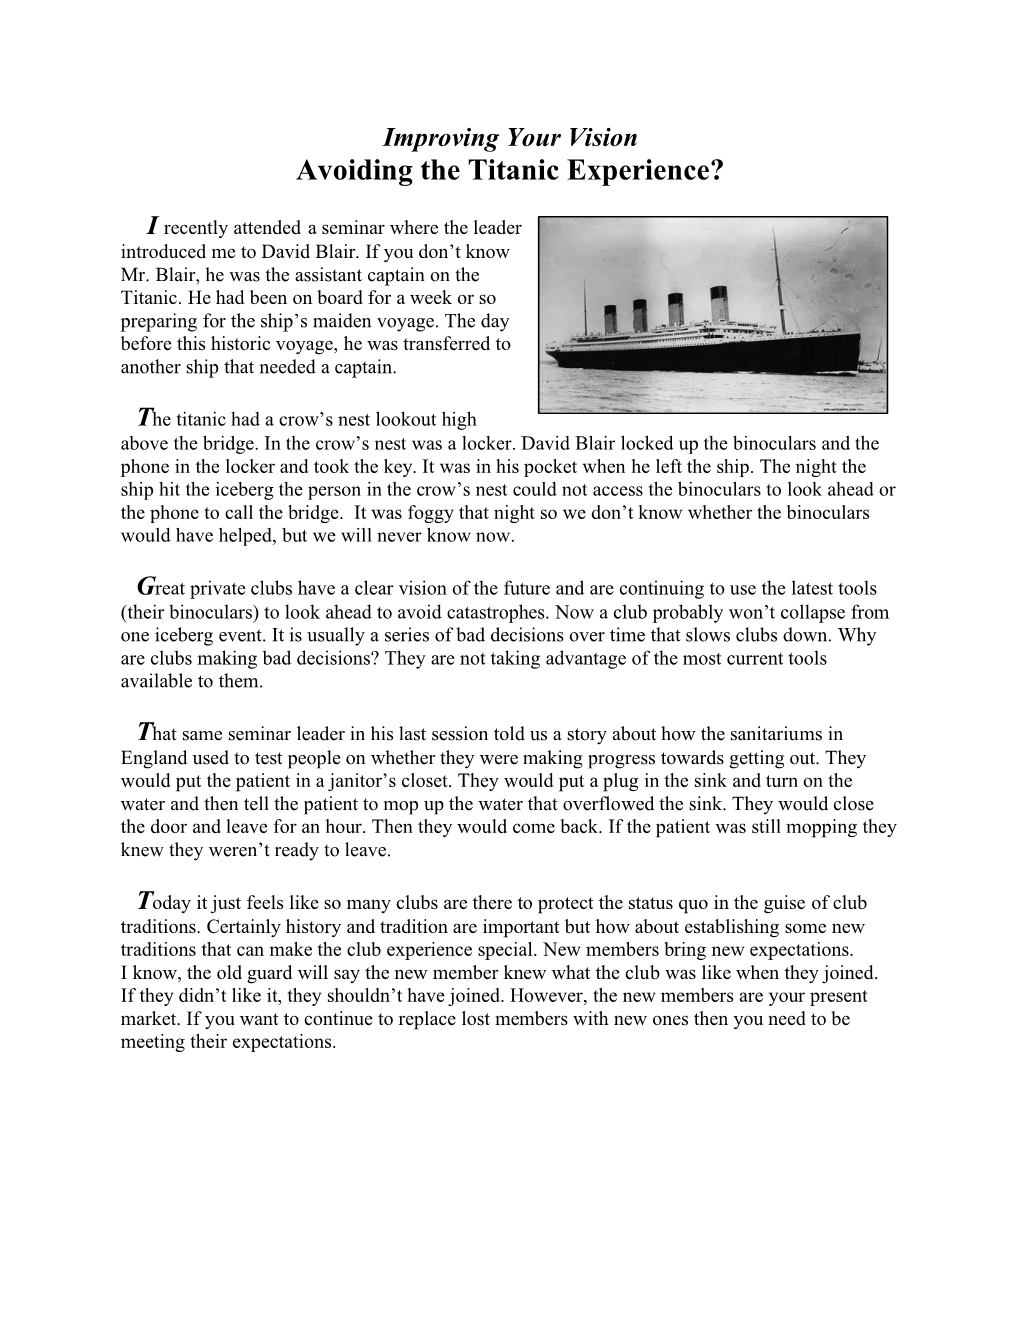 Avoiding the Titanic Experience?